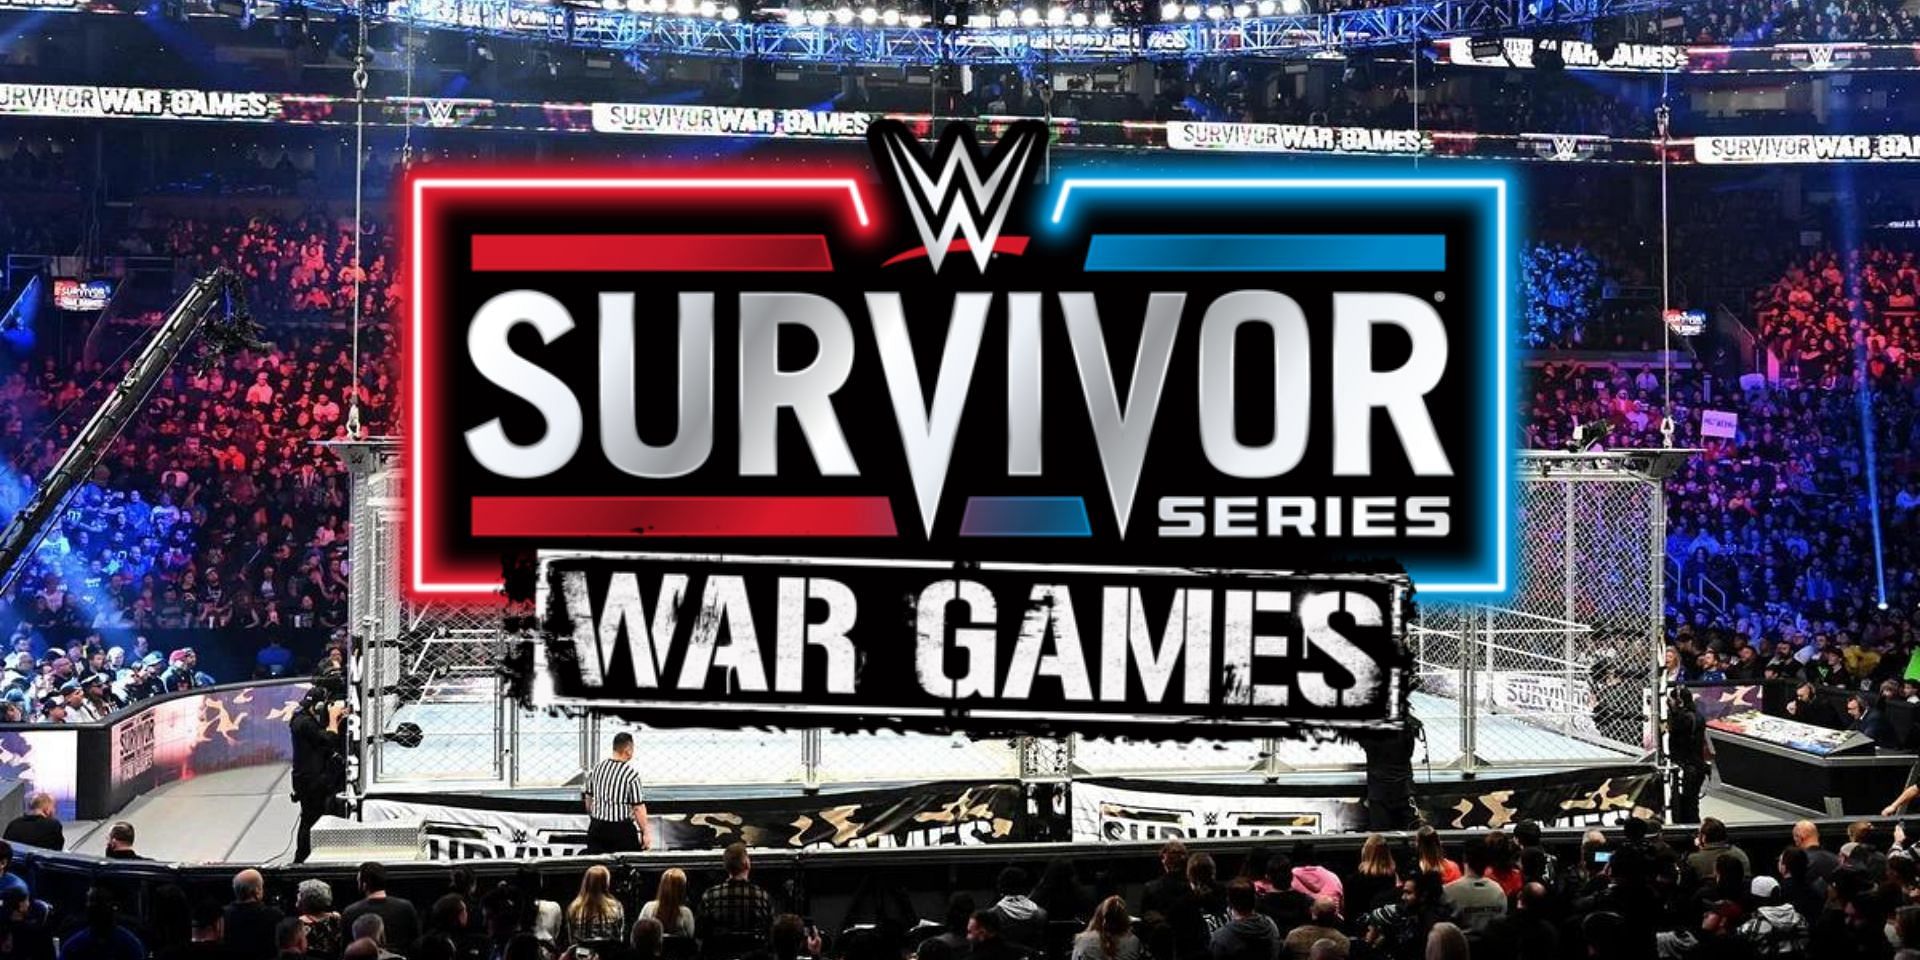 A Survivor Series match has been announced 